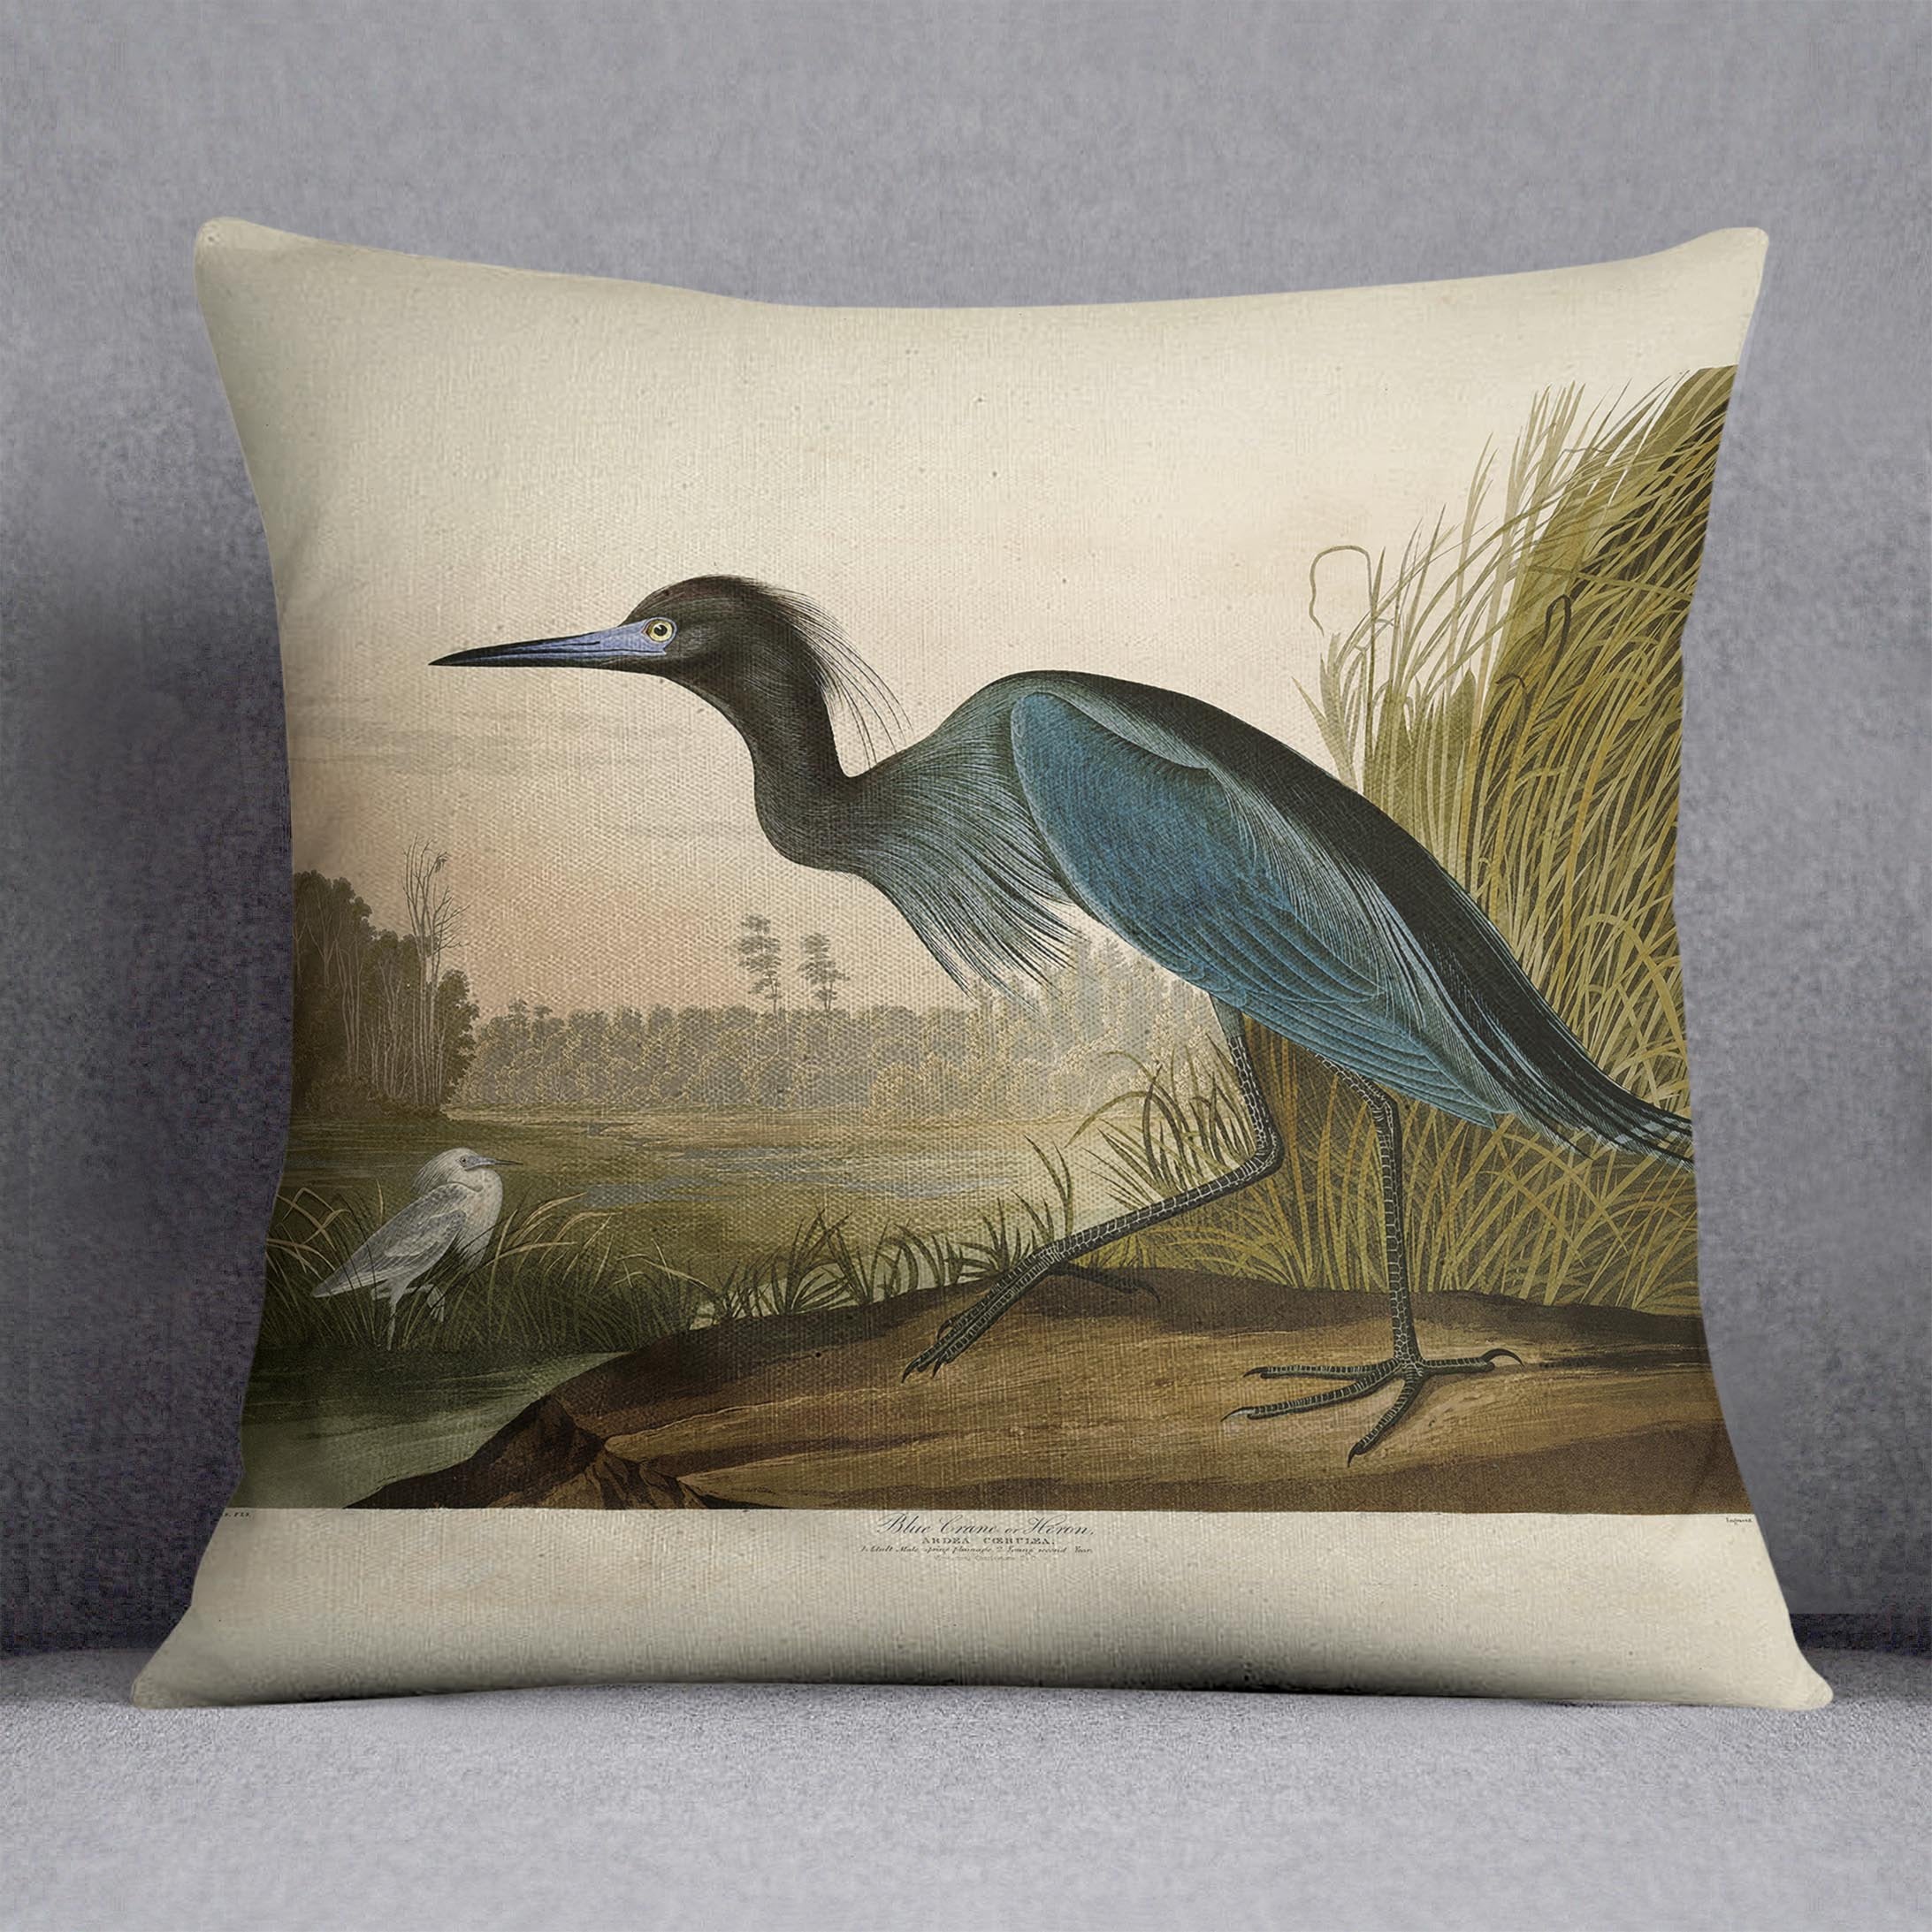 Blue Crane by Audubon Cushion